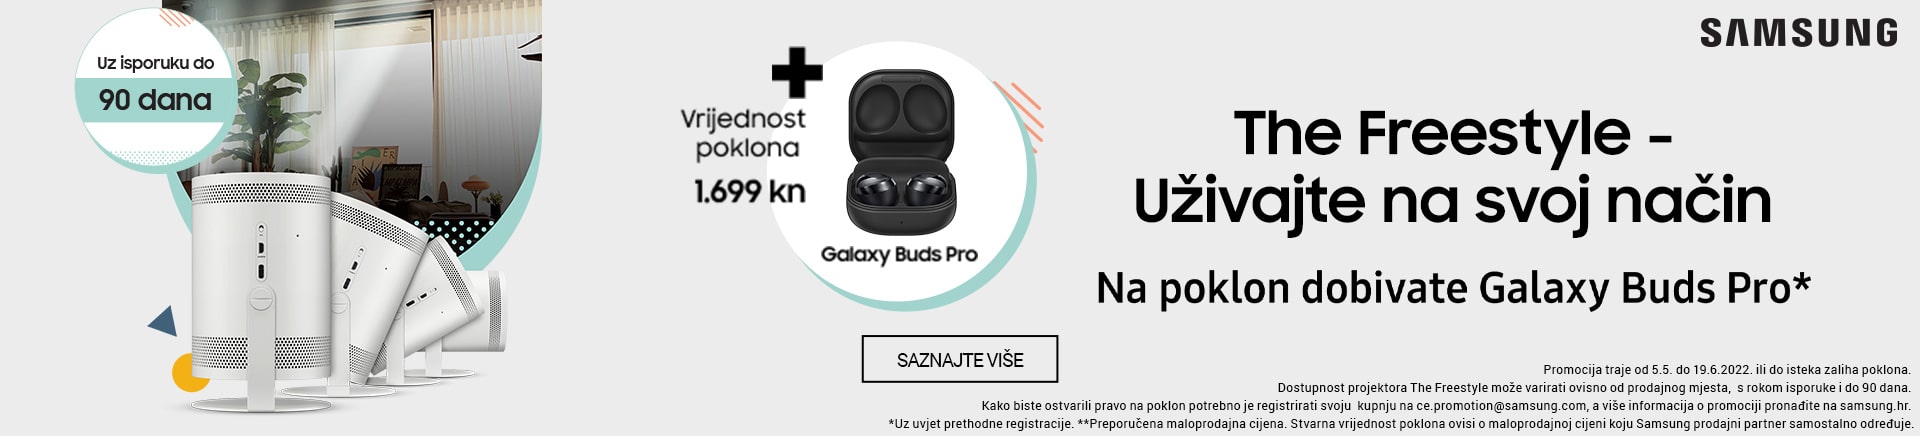 Samsung Freestyle + poklon Galaxy Buds pro